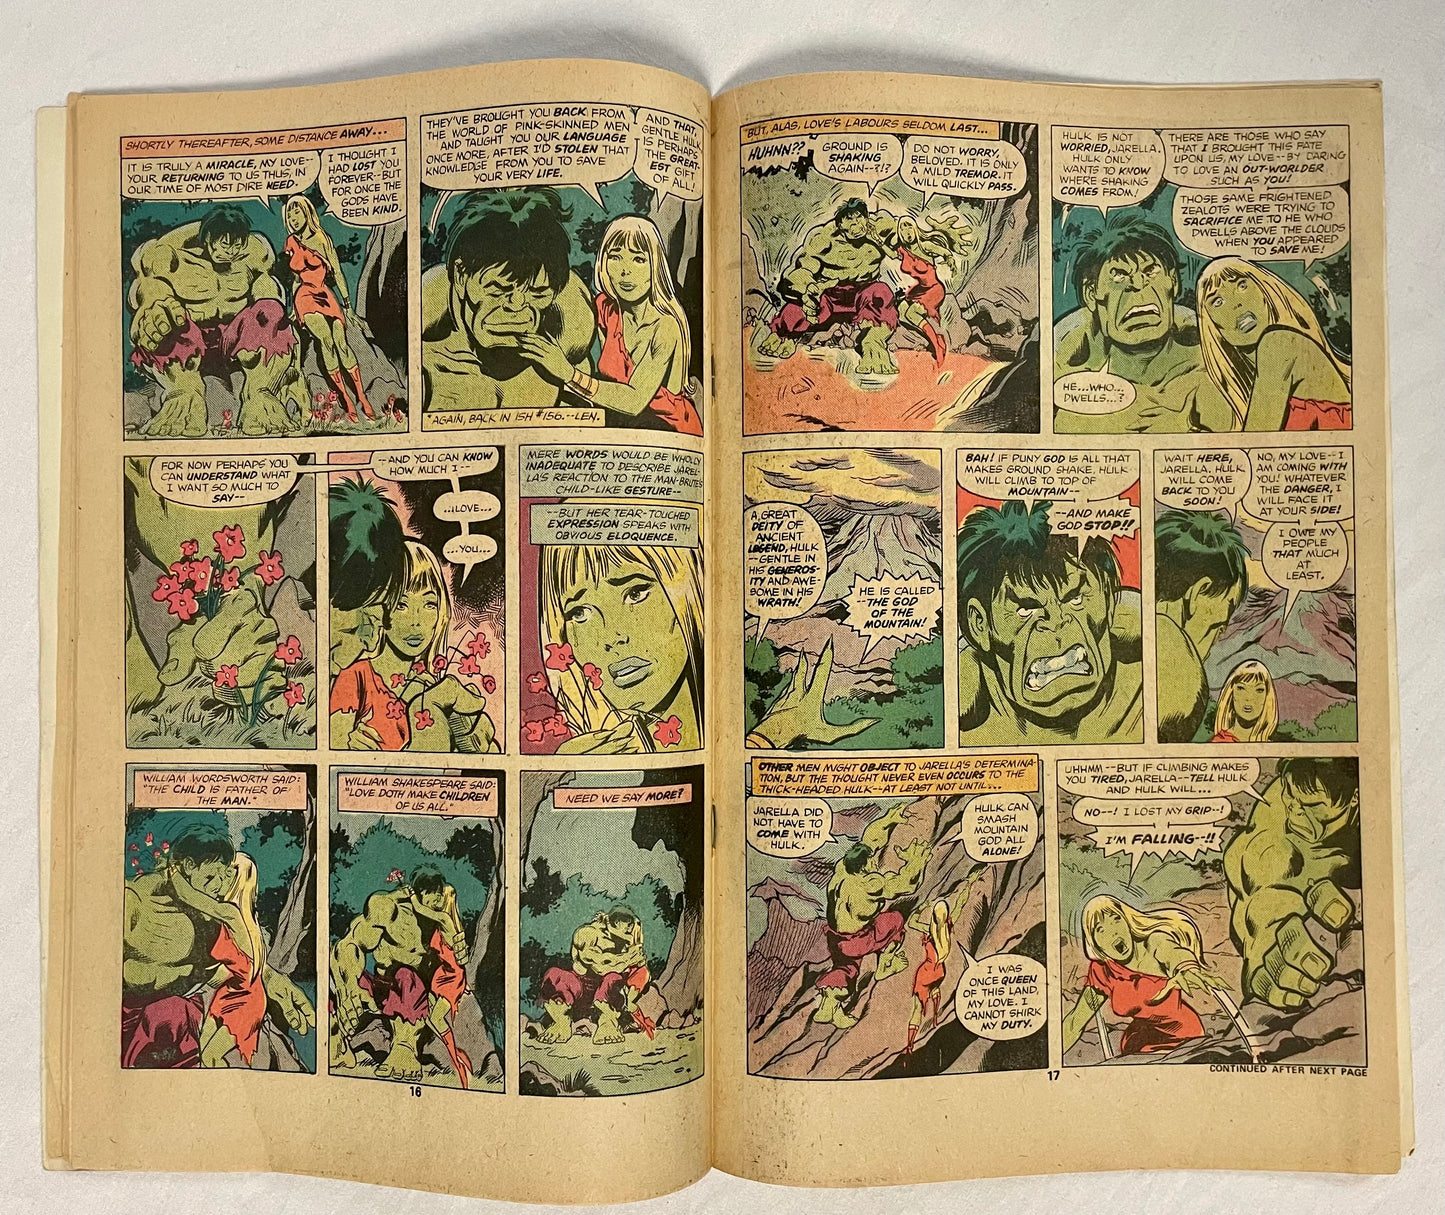 Marvel Comics The Incredible Hulk #202